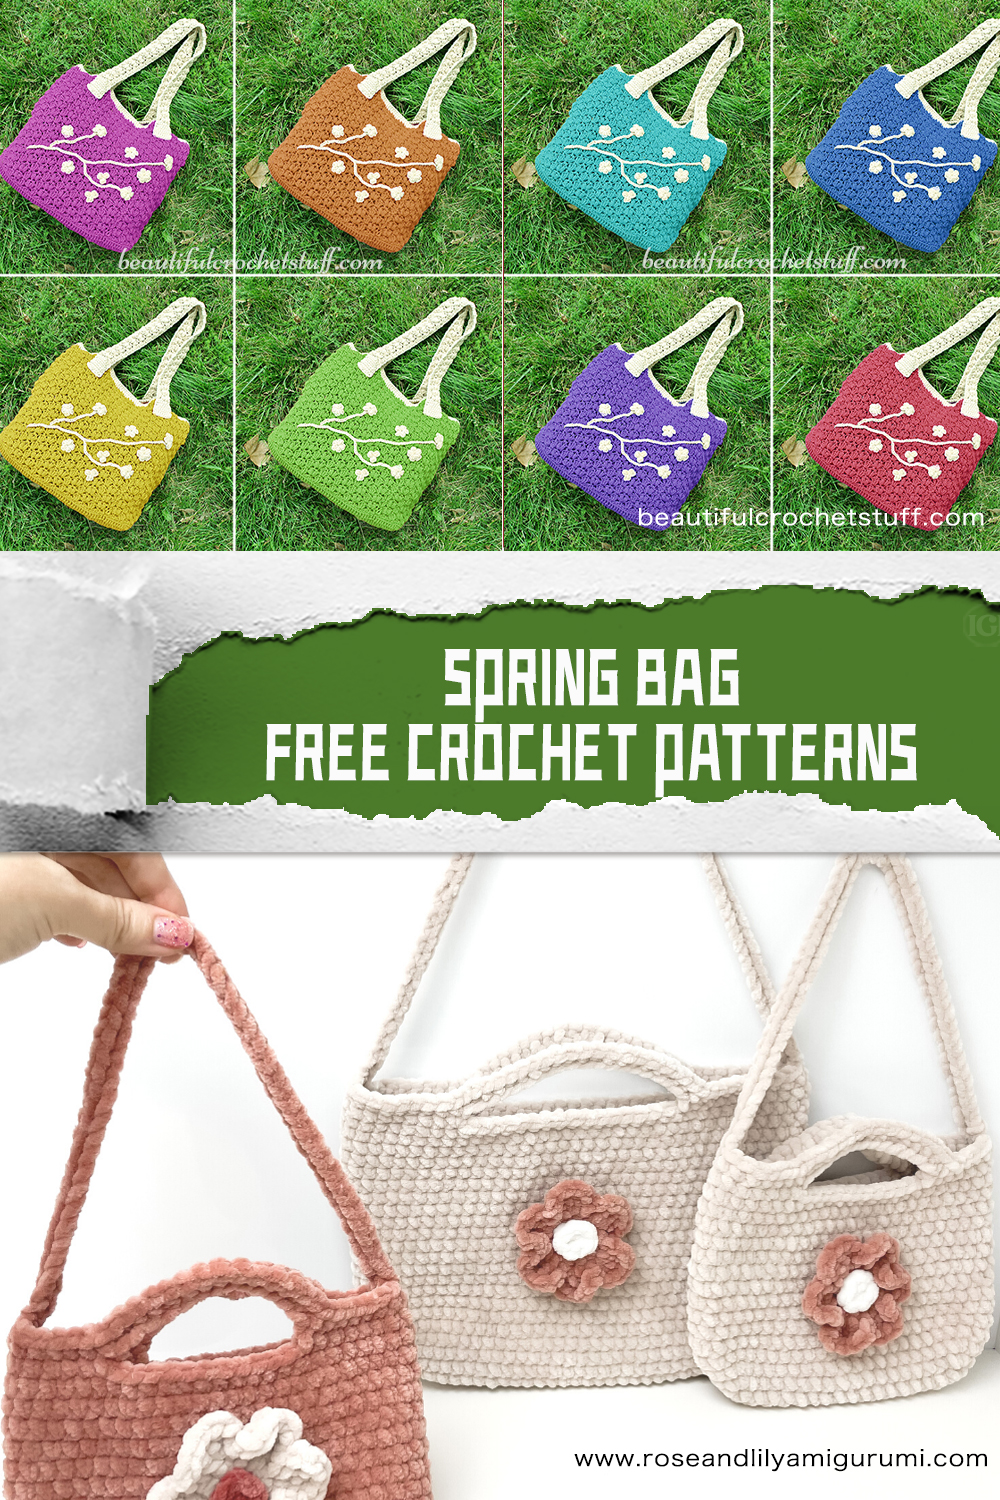 FREE Spring Bag Crochet Patterns